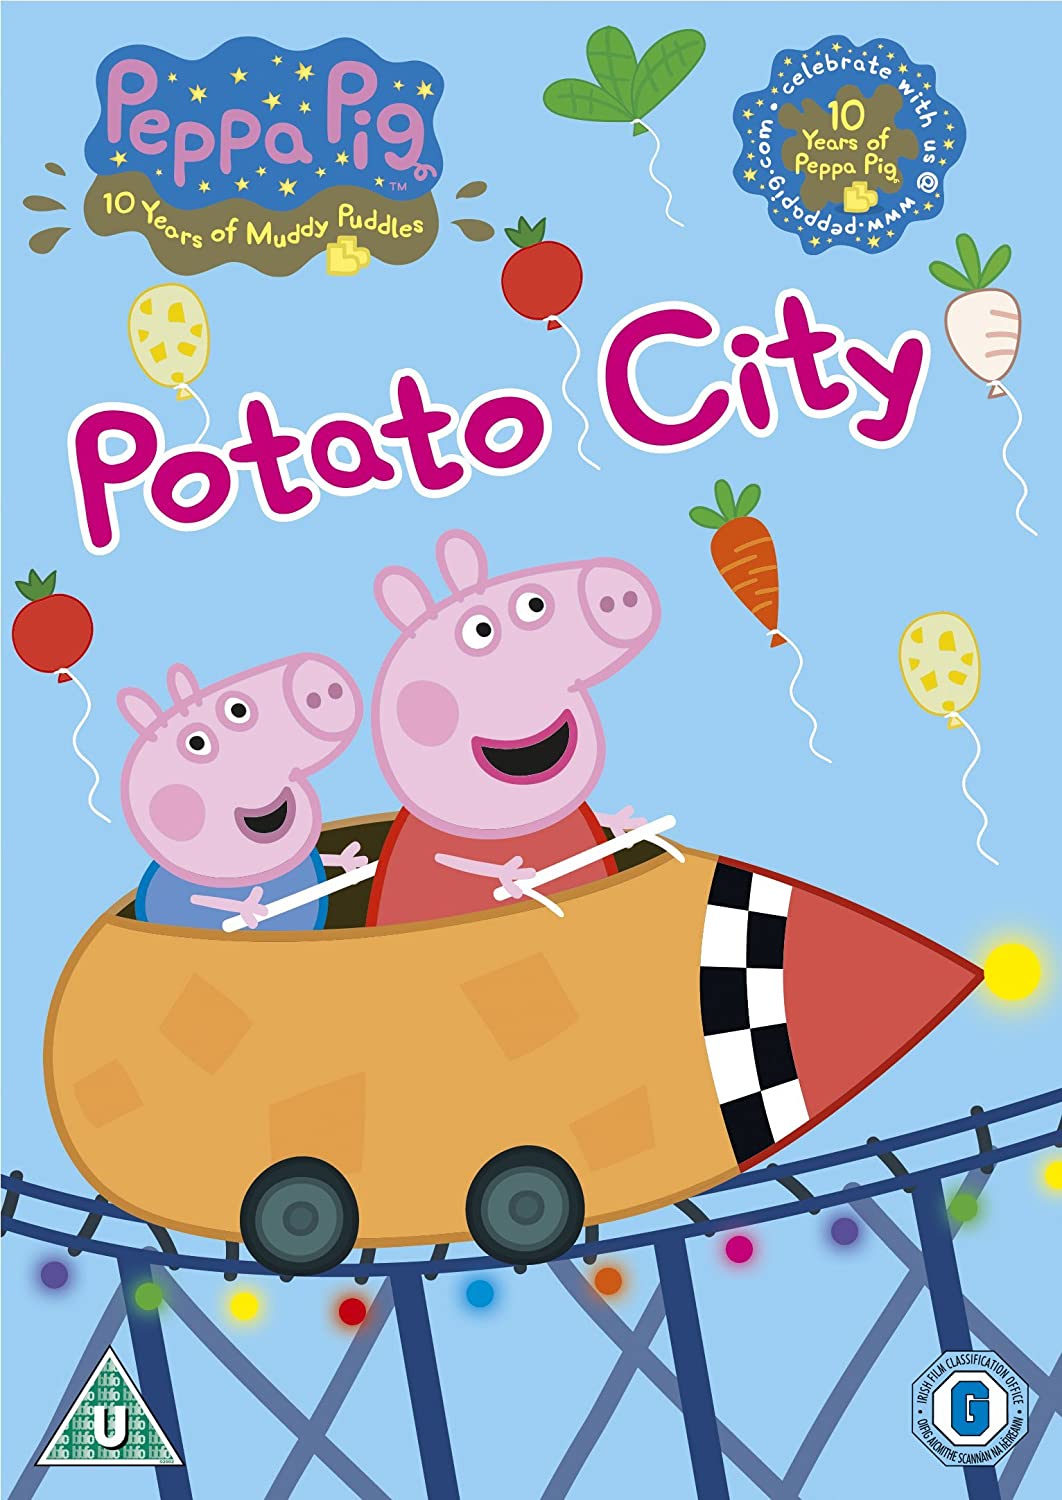 Peppa Pig: Potato City [Volume 14] - Animation [DVD]